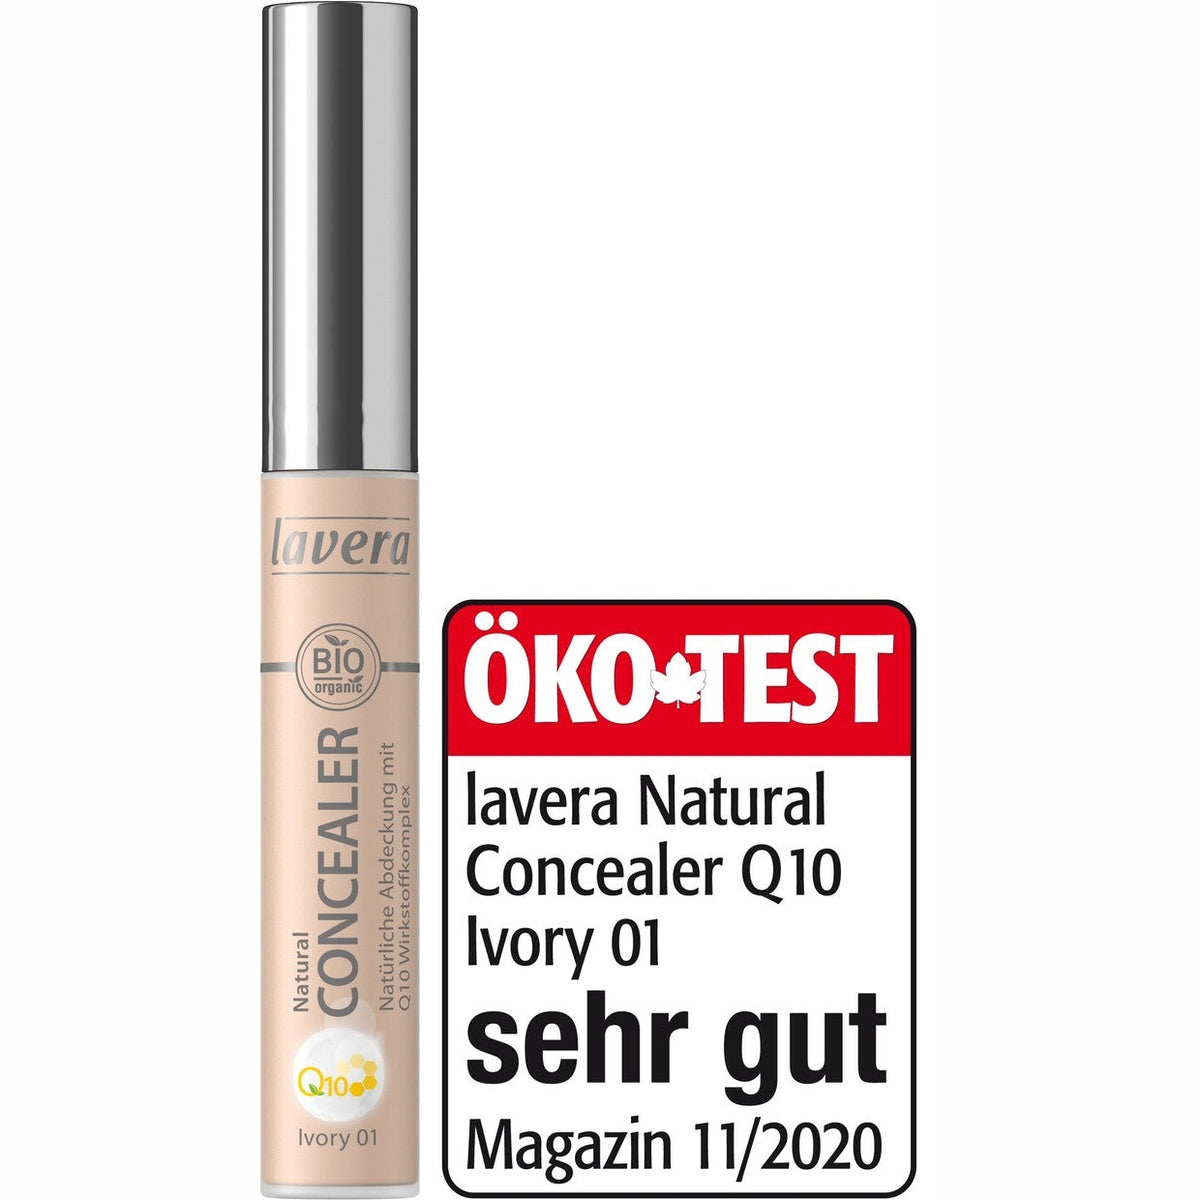 Lavera Natural Concealer Q10 - Organic Ivory Makeup 01 firstorganicbaby - –